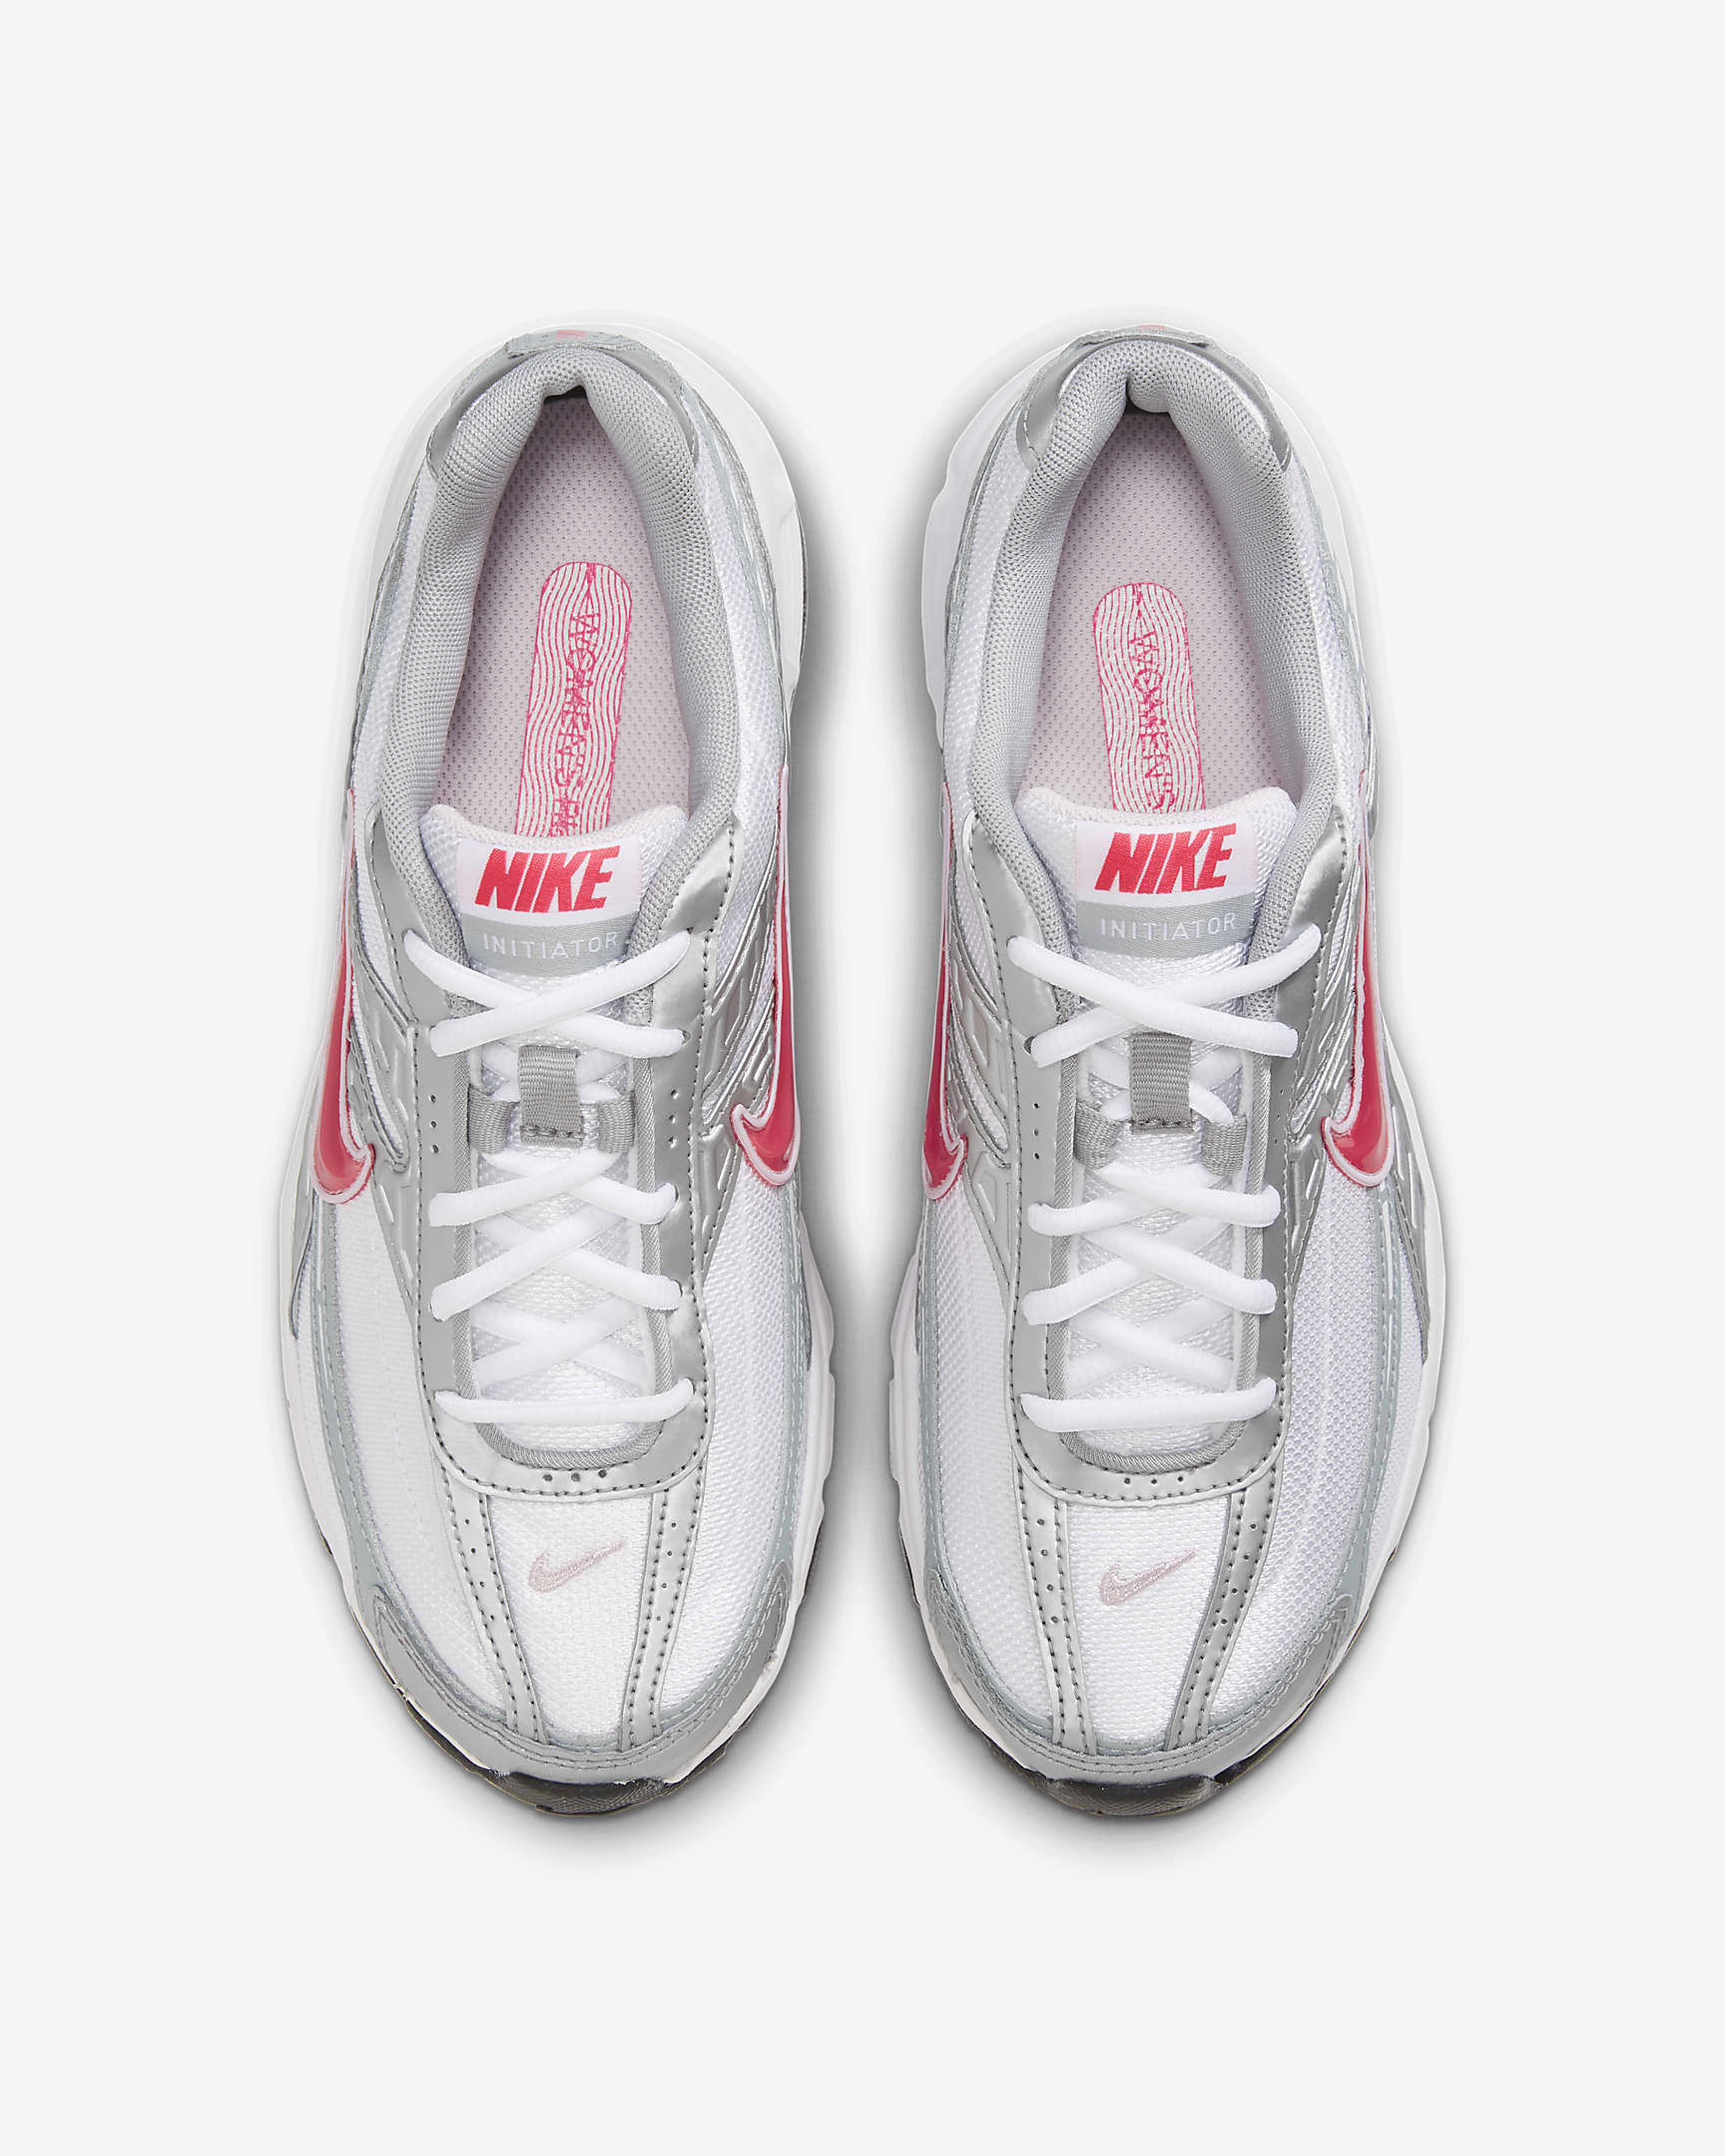 Nike Initiator Women's Shoes - White/Metallic Silver/Mist Blue/Cherry